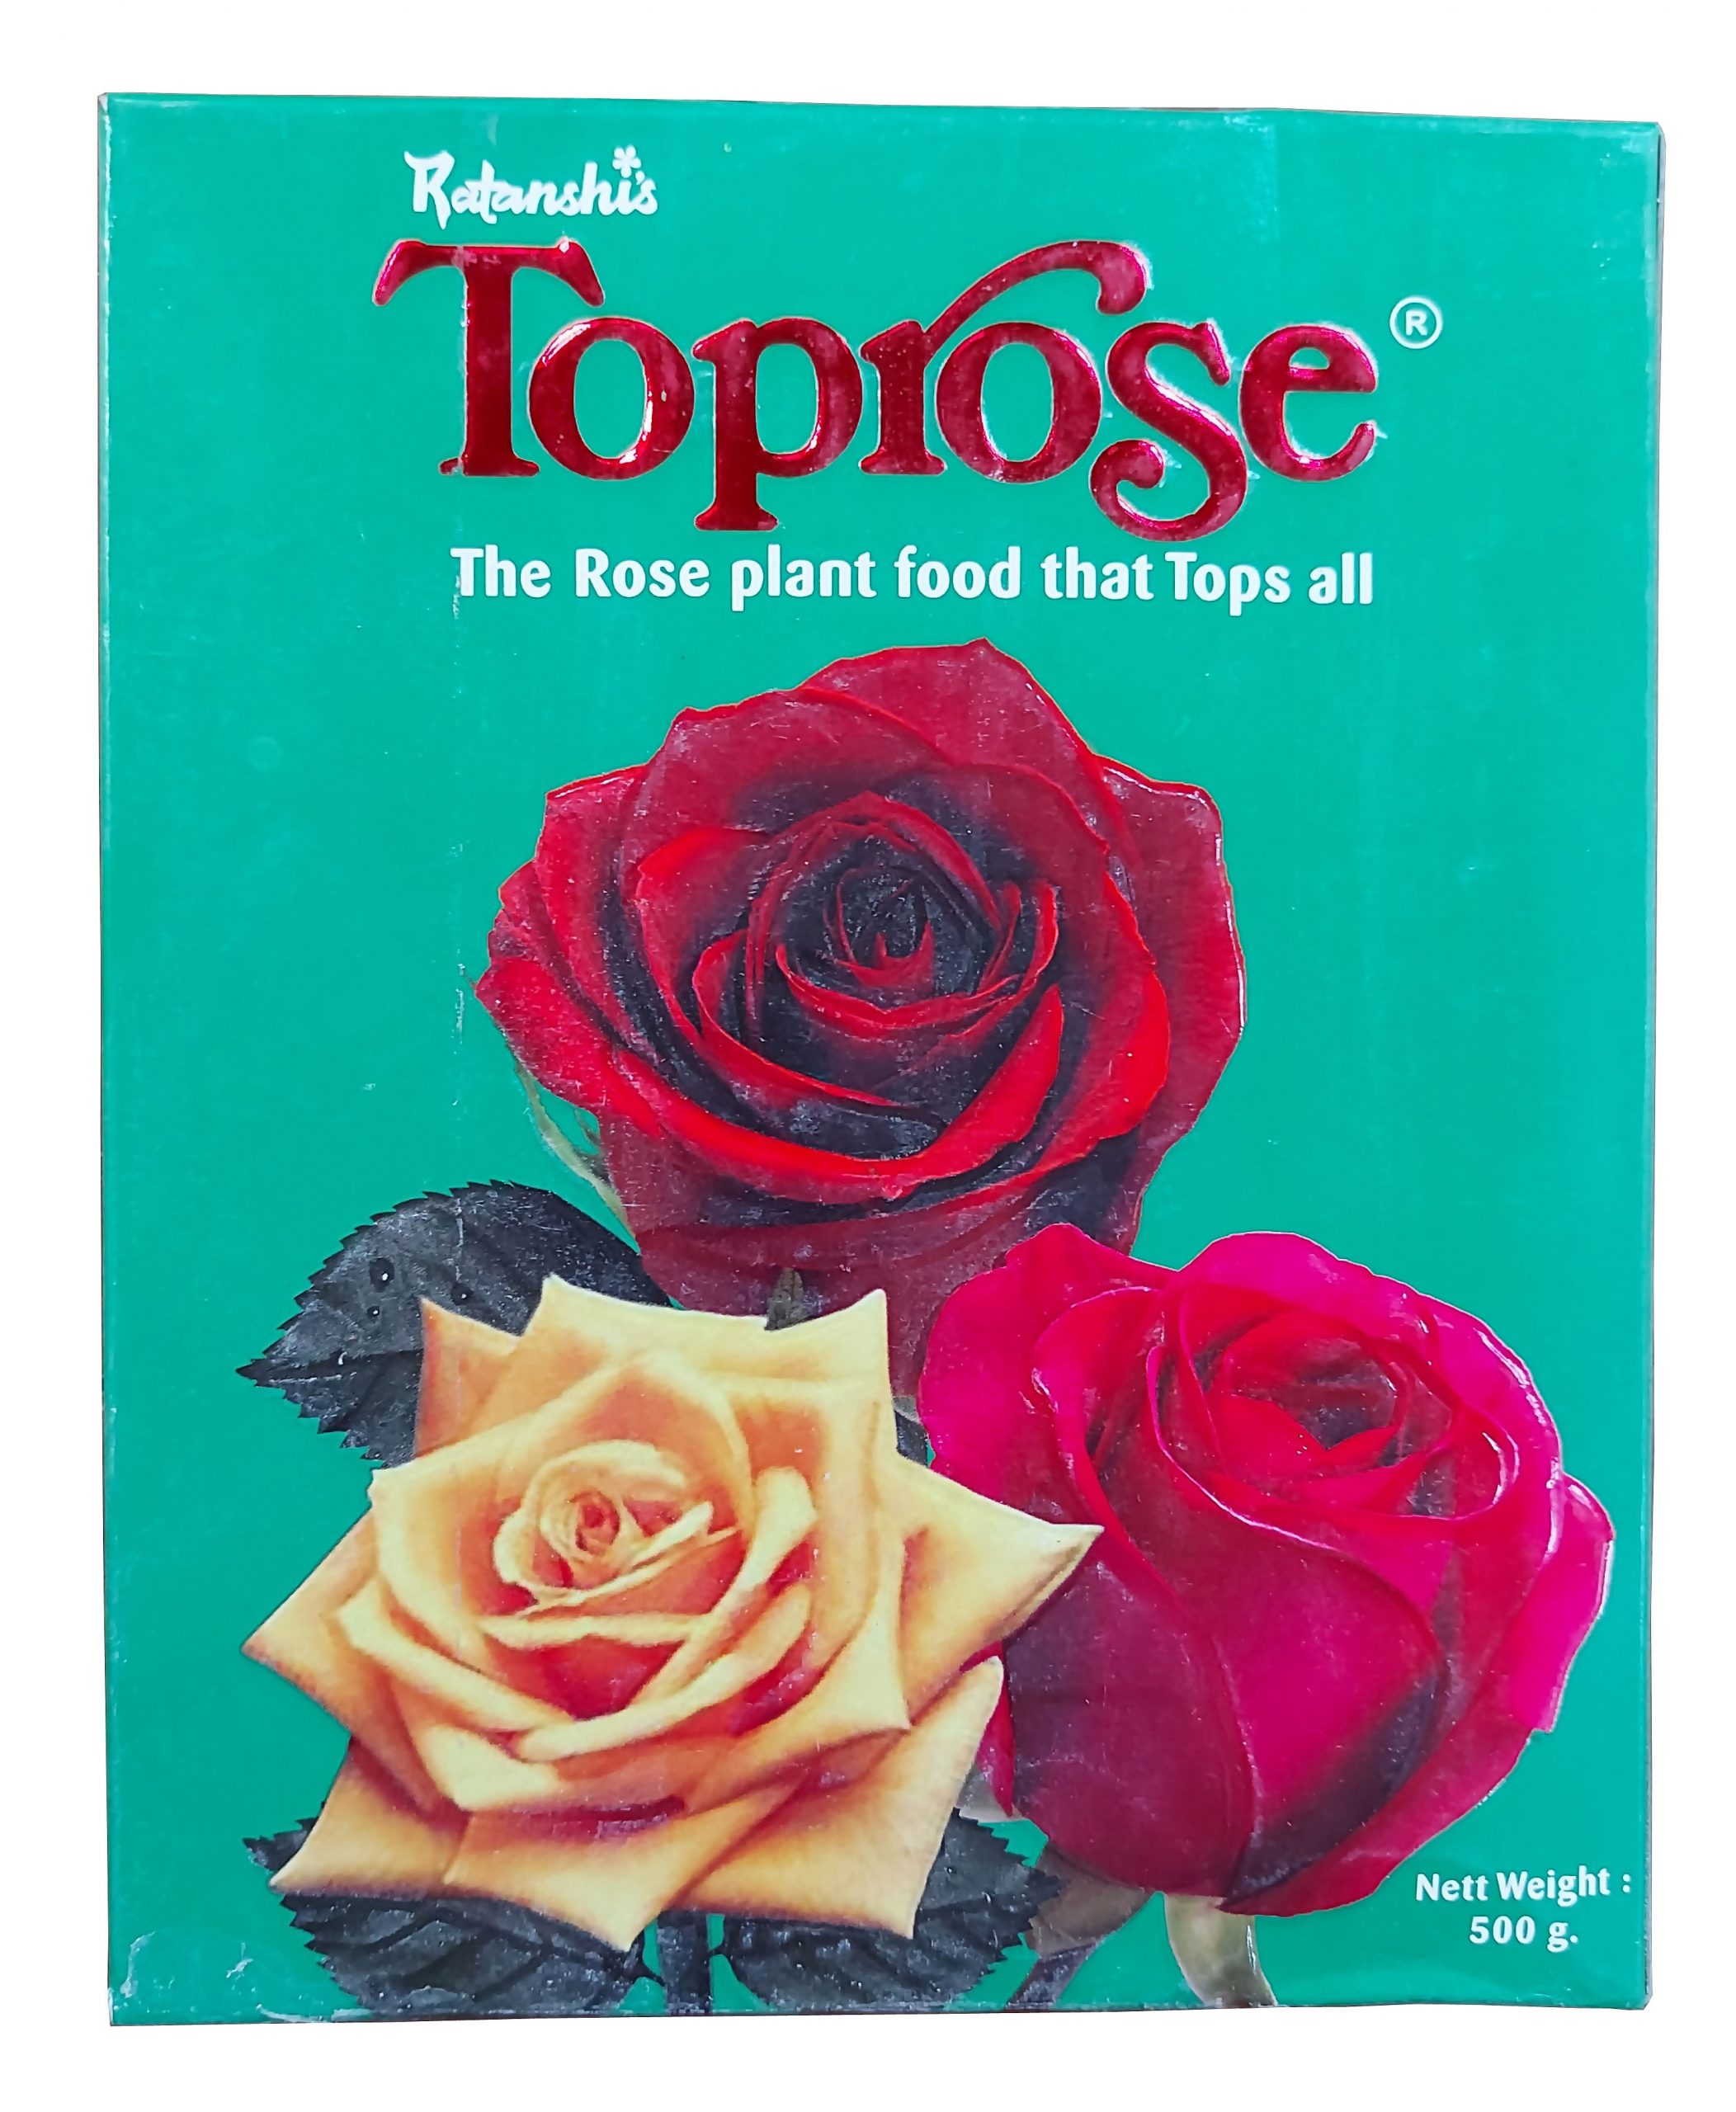 Toprose rose plant food